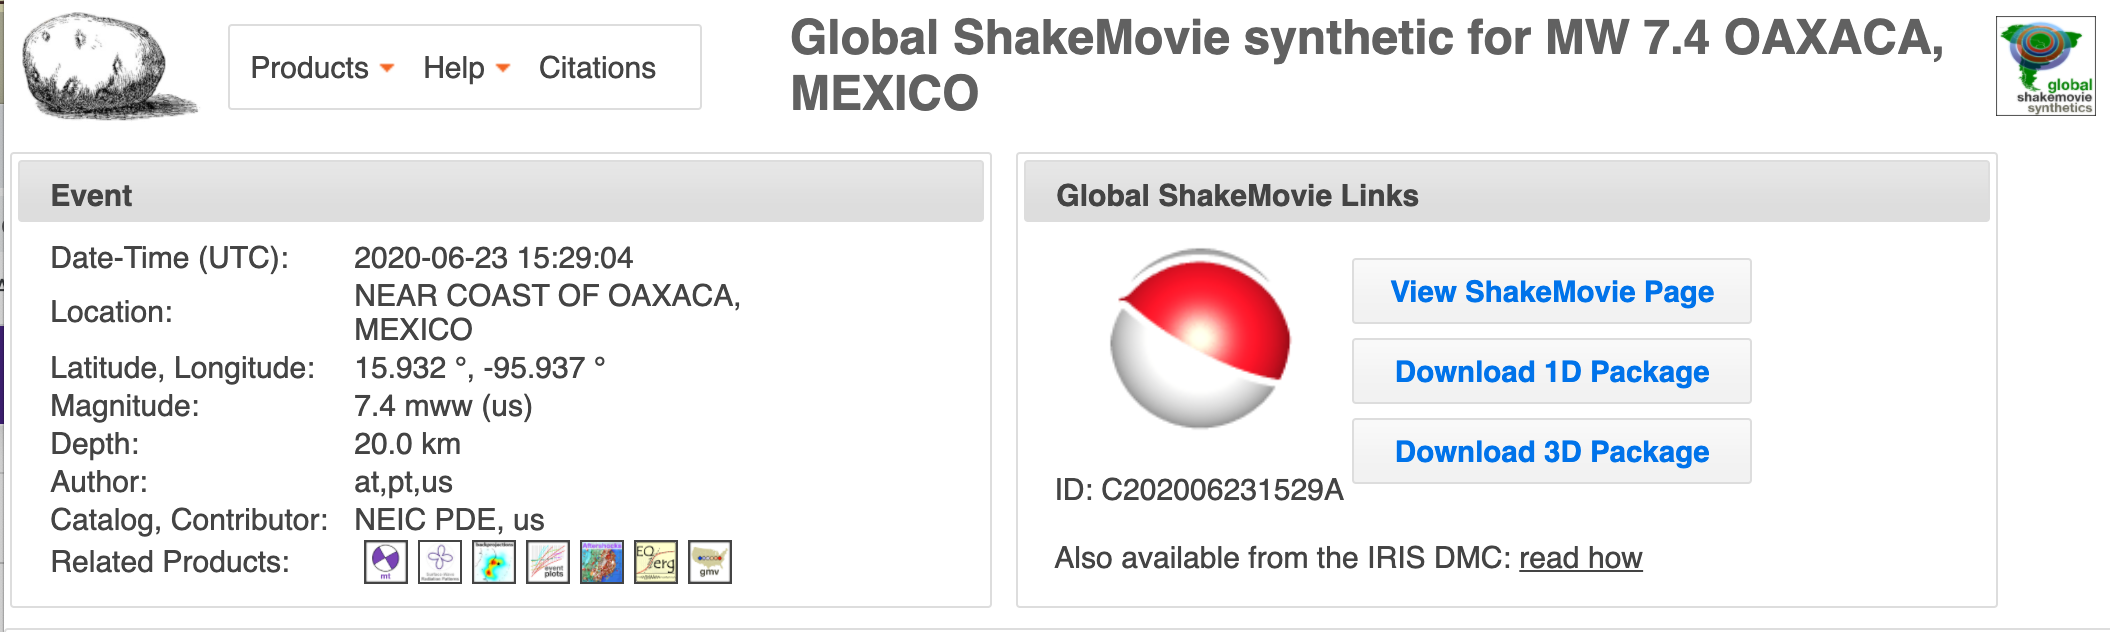 Global Shake Movie